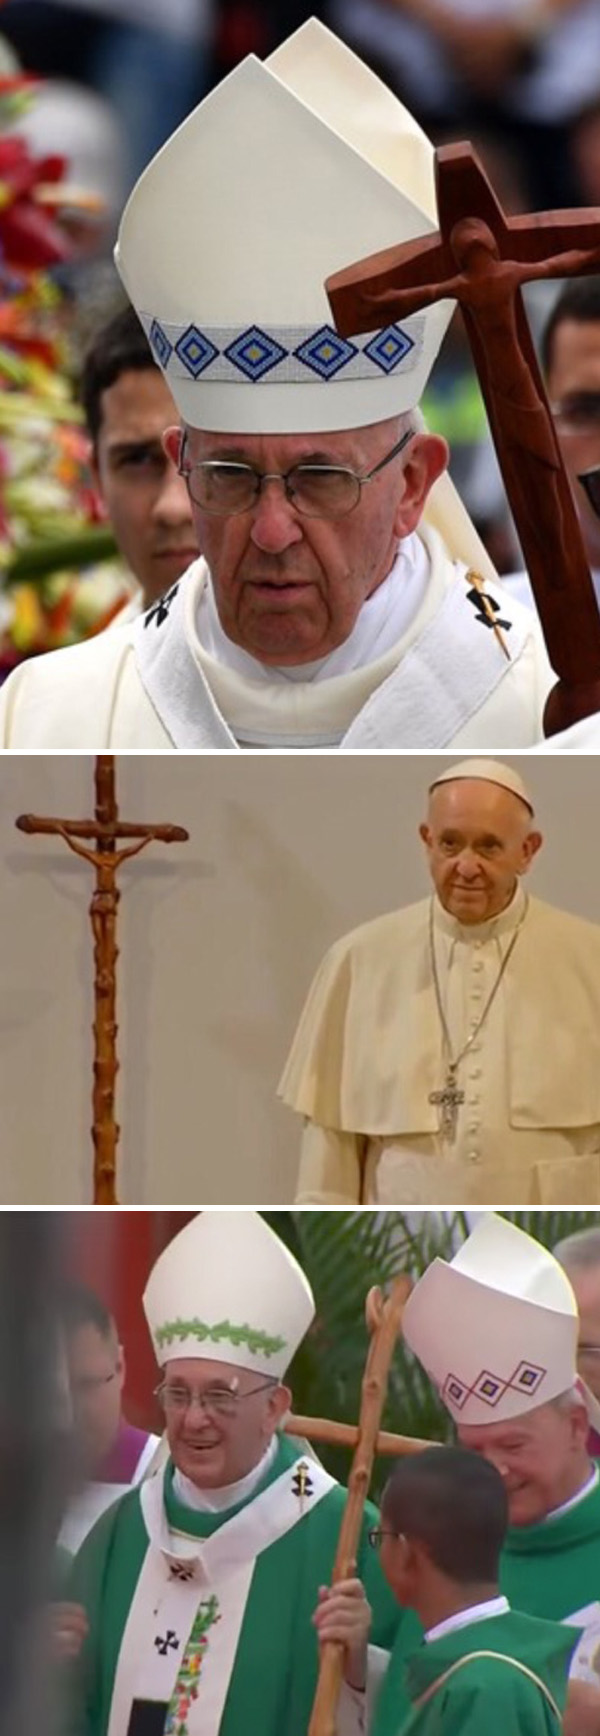 Pauperist papal crossier 2